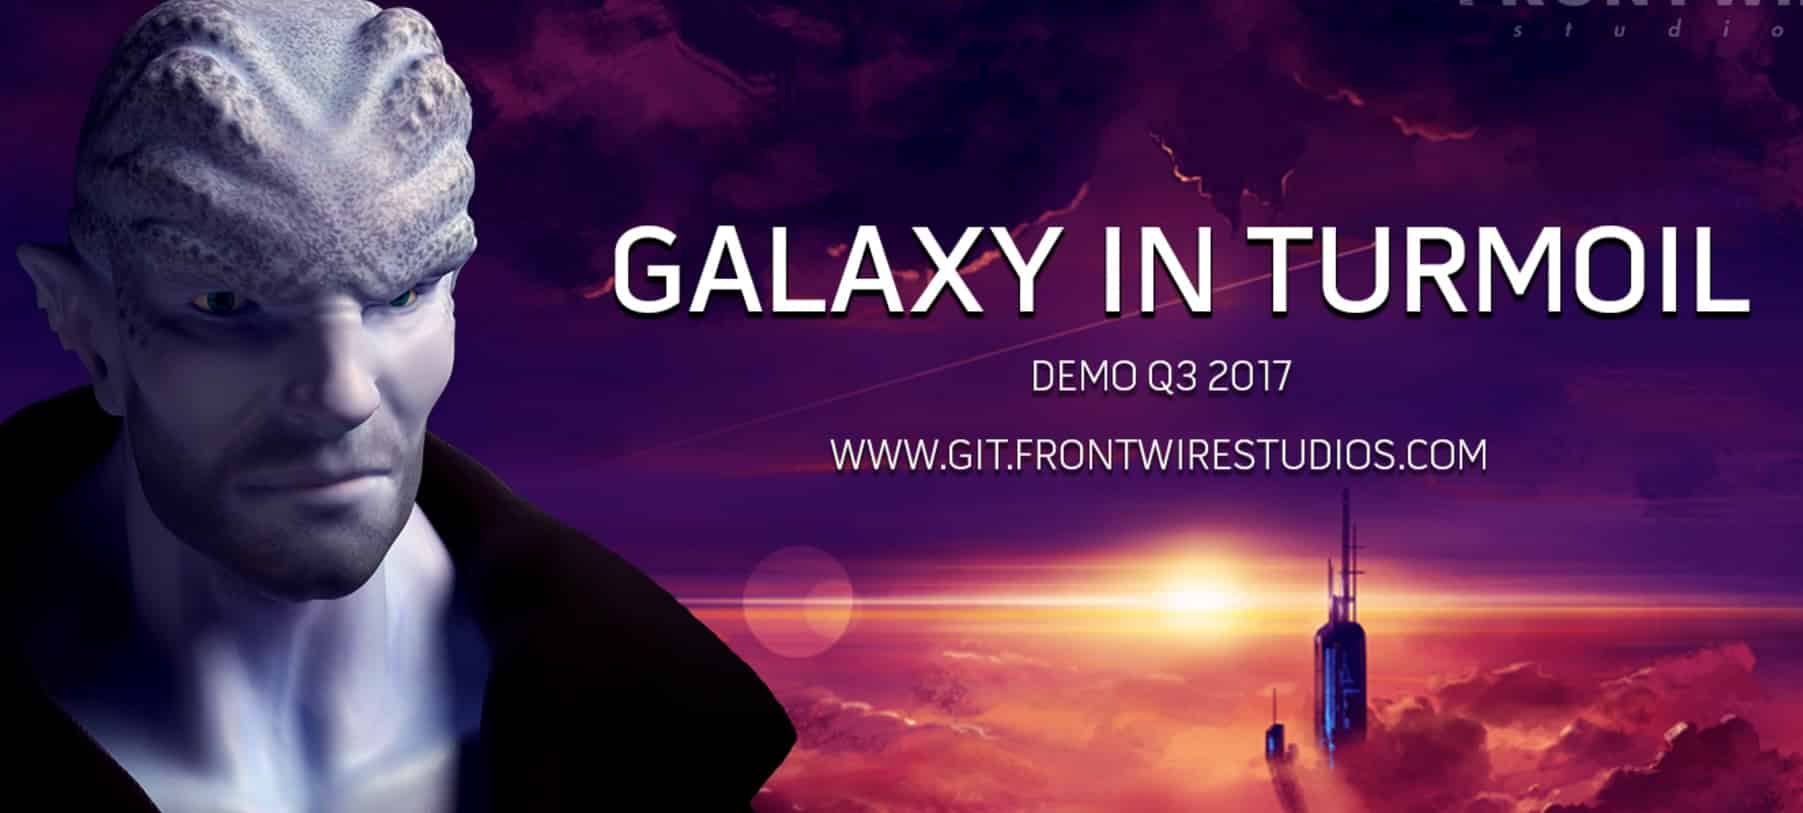 Galaxy in Turmoil เกมแฟนเมด Starwars ยังคงสร้างต่อ แม้จะโดนสั่งแบน